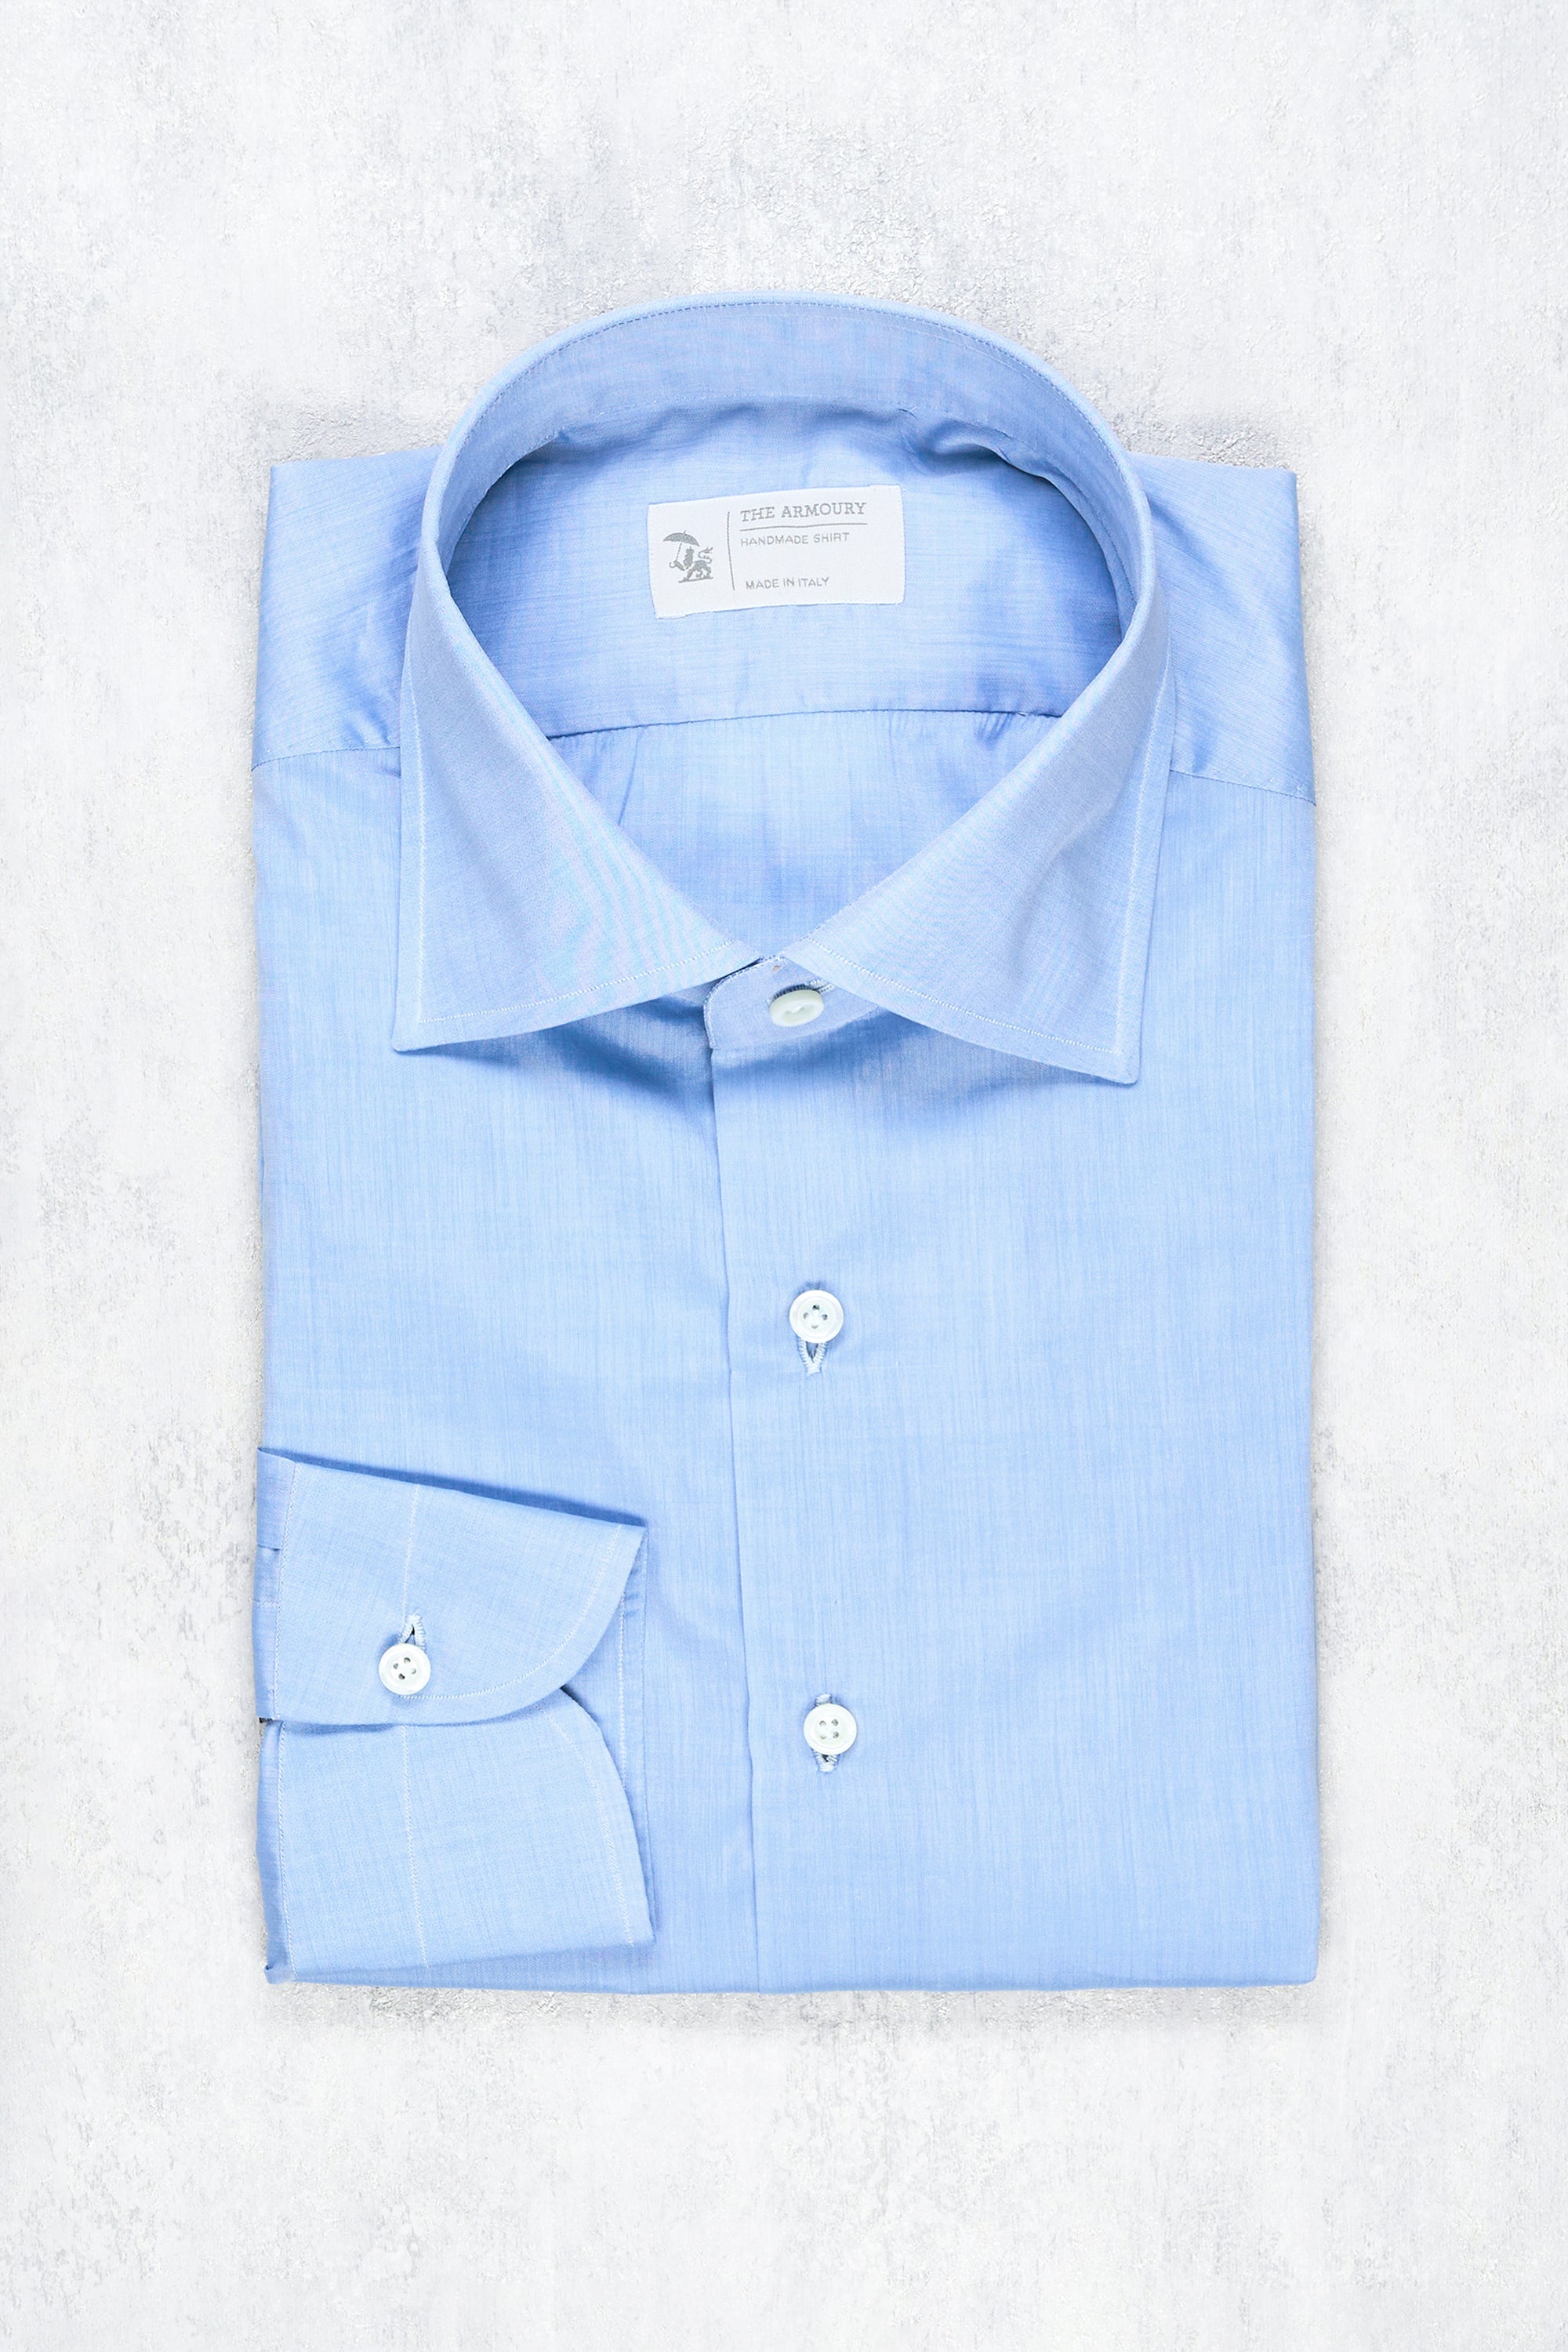 The Armoury Blue Cotton Spread Collar Shirt MTM